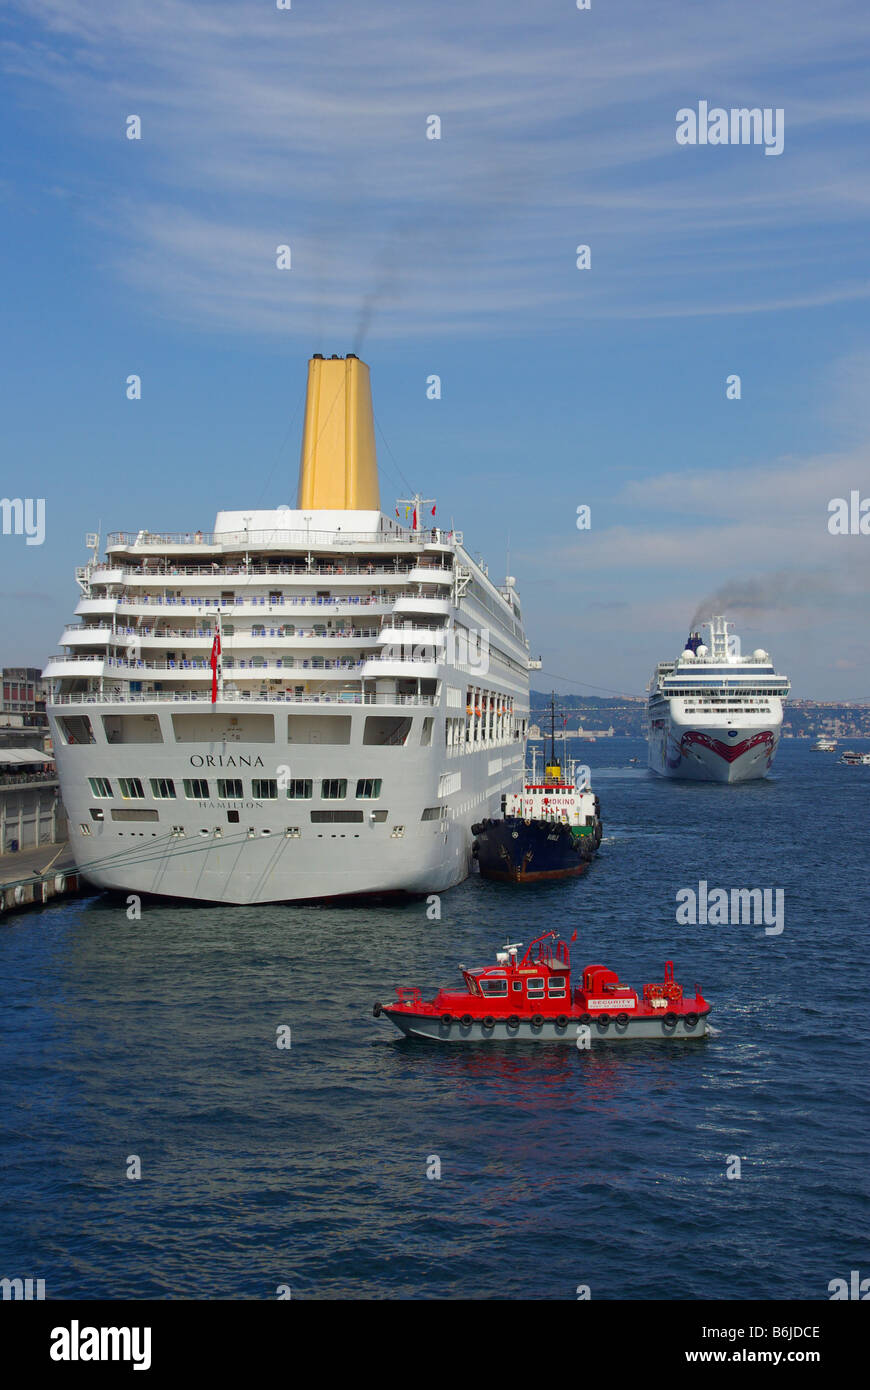 Istanbul Port on Bosporus waterway cruise ship P&O Oriana with red security launch & Norwegian Jewel ocean liner beyond Turkey Europe Stock Photo